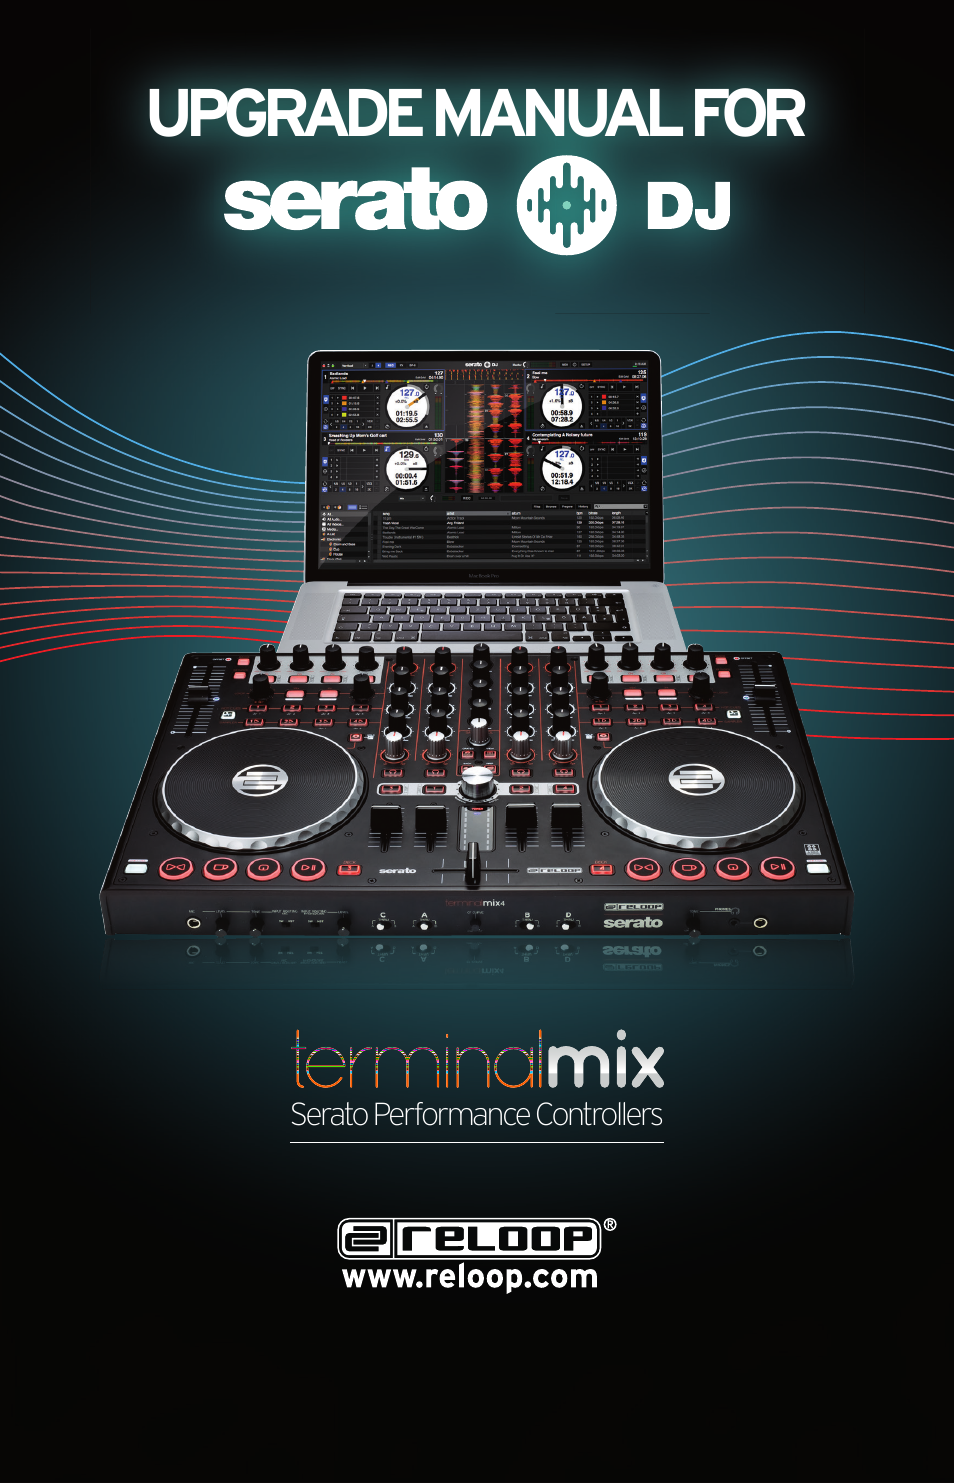 TERMINAL MIX 4 - Upgrade Manual For Serato DJ